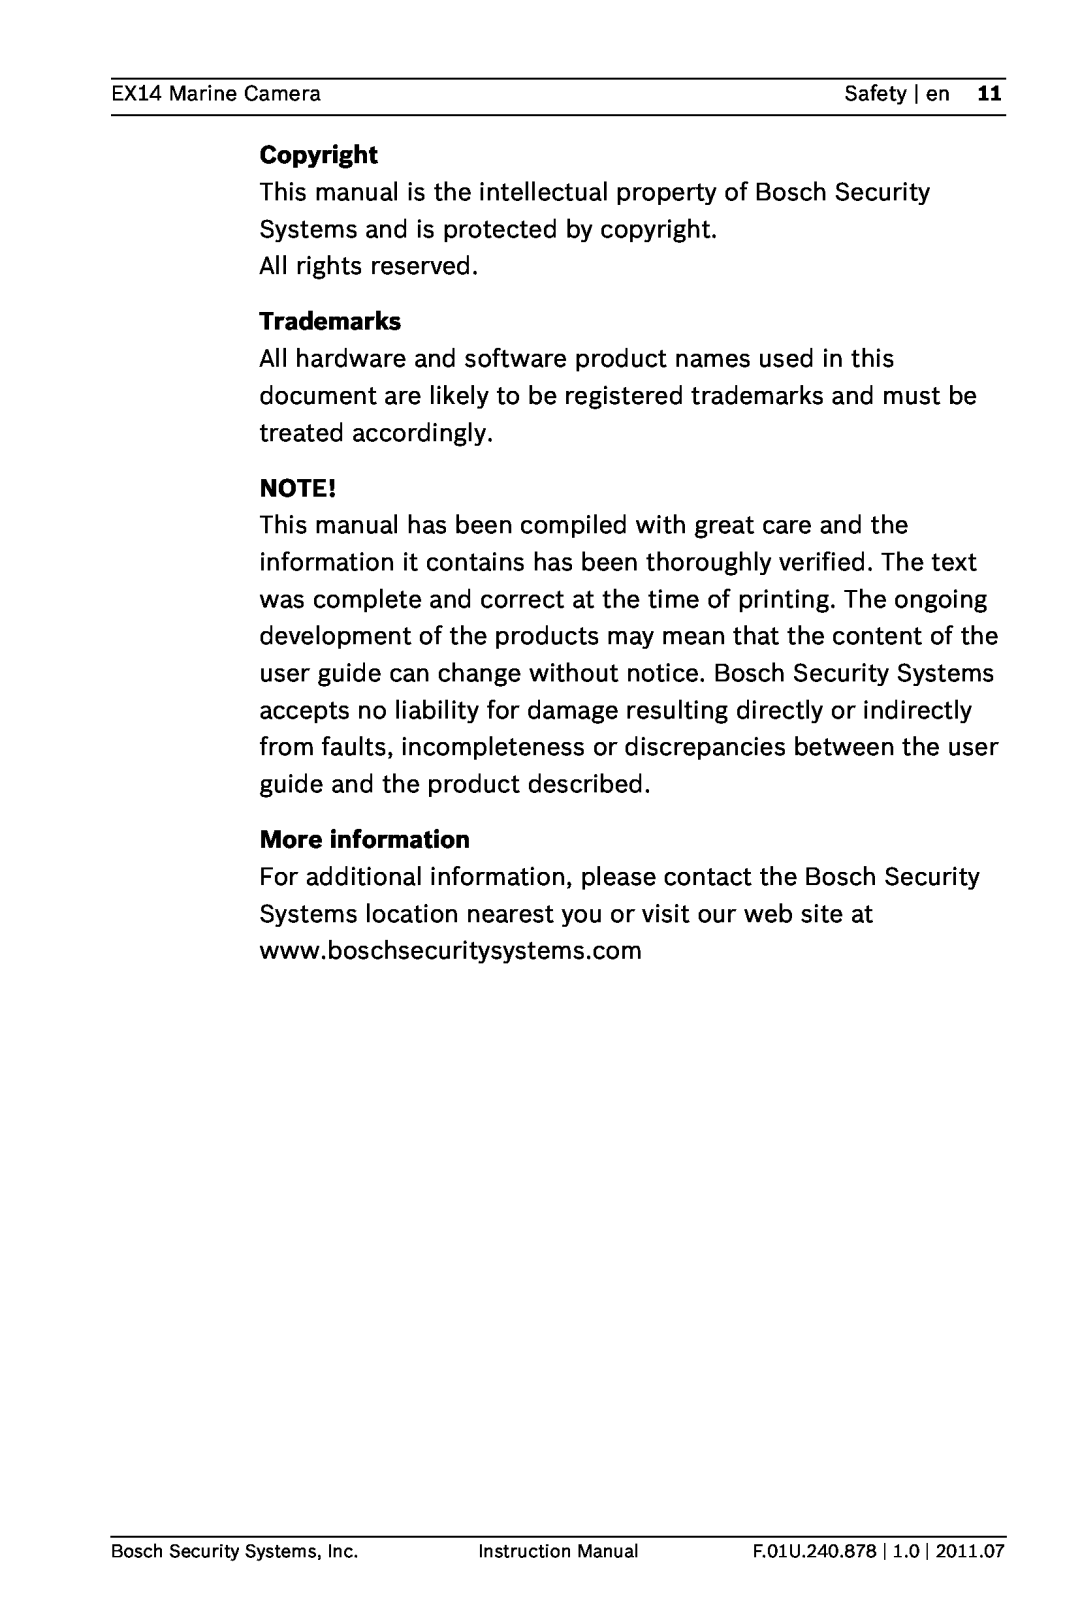 Bosch Appliances EX14 instruction manual Copyright, Trademarks, More information 